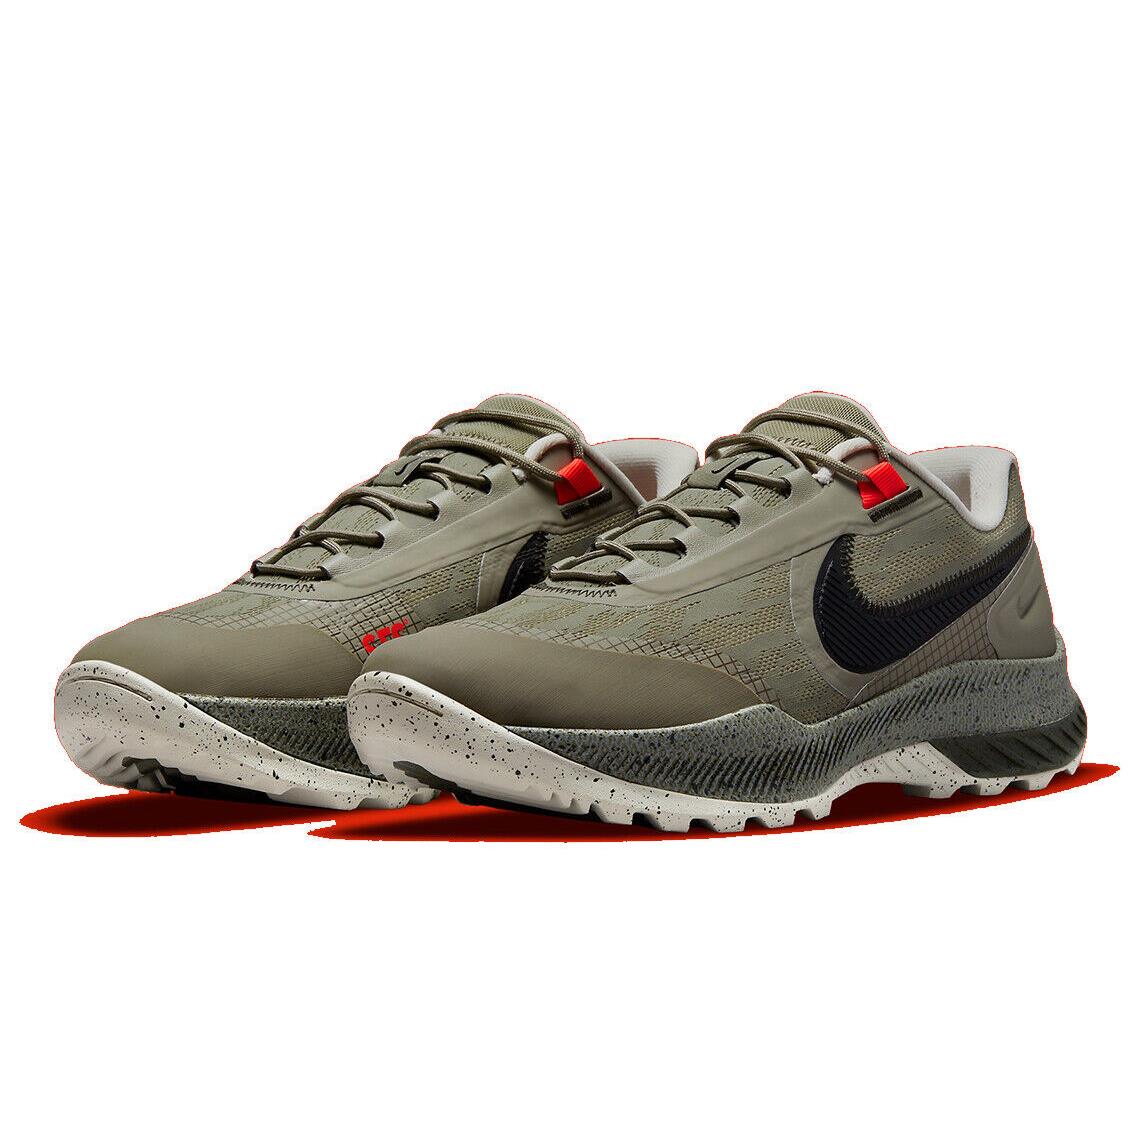 Nike React Sfb Carbon Low Mens Size 8 Sneaker Shoes CZ7399 300 Light Army